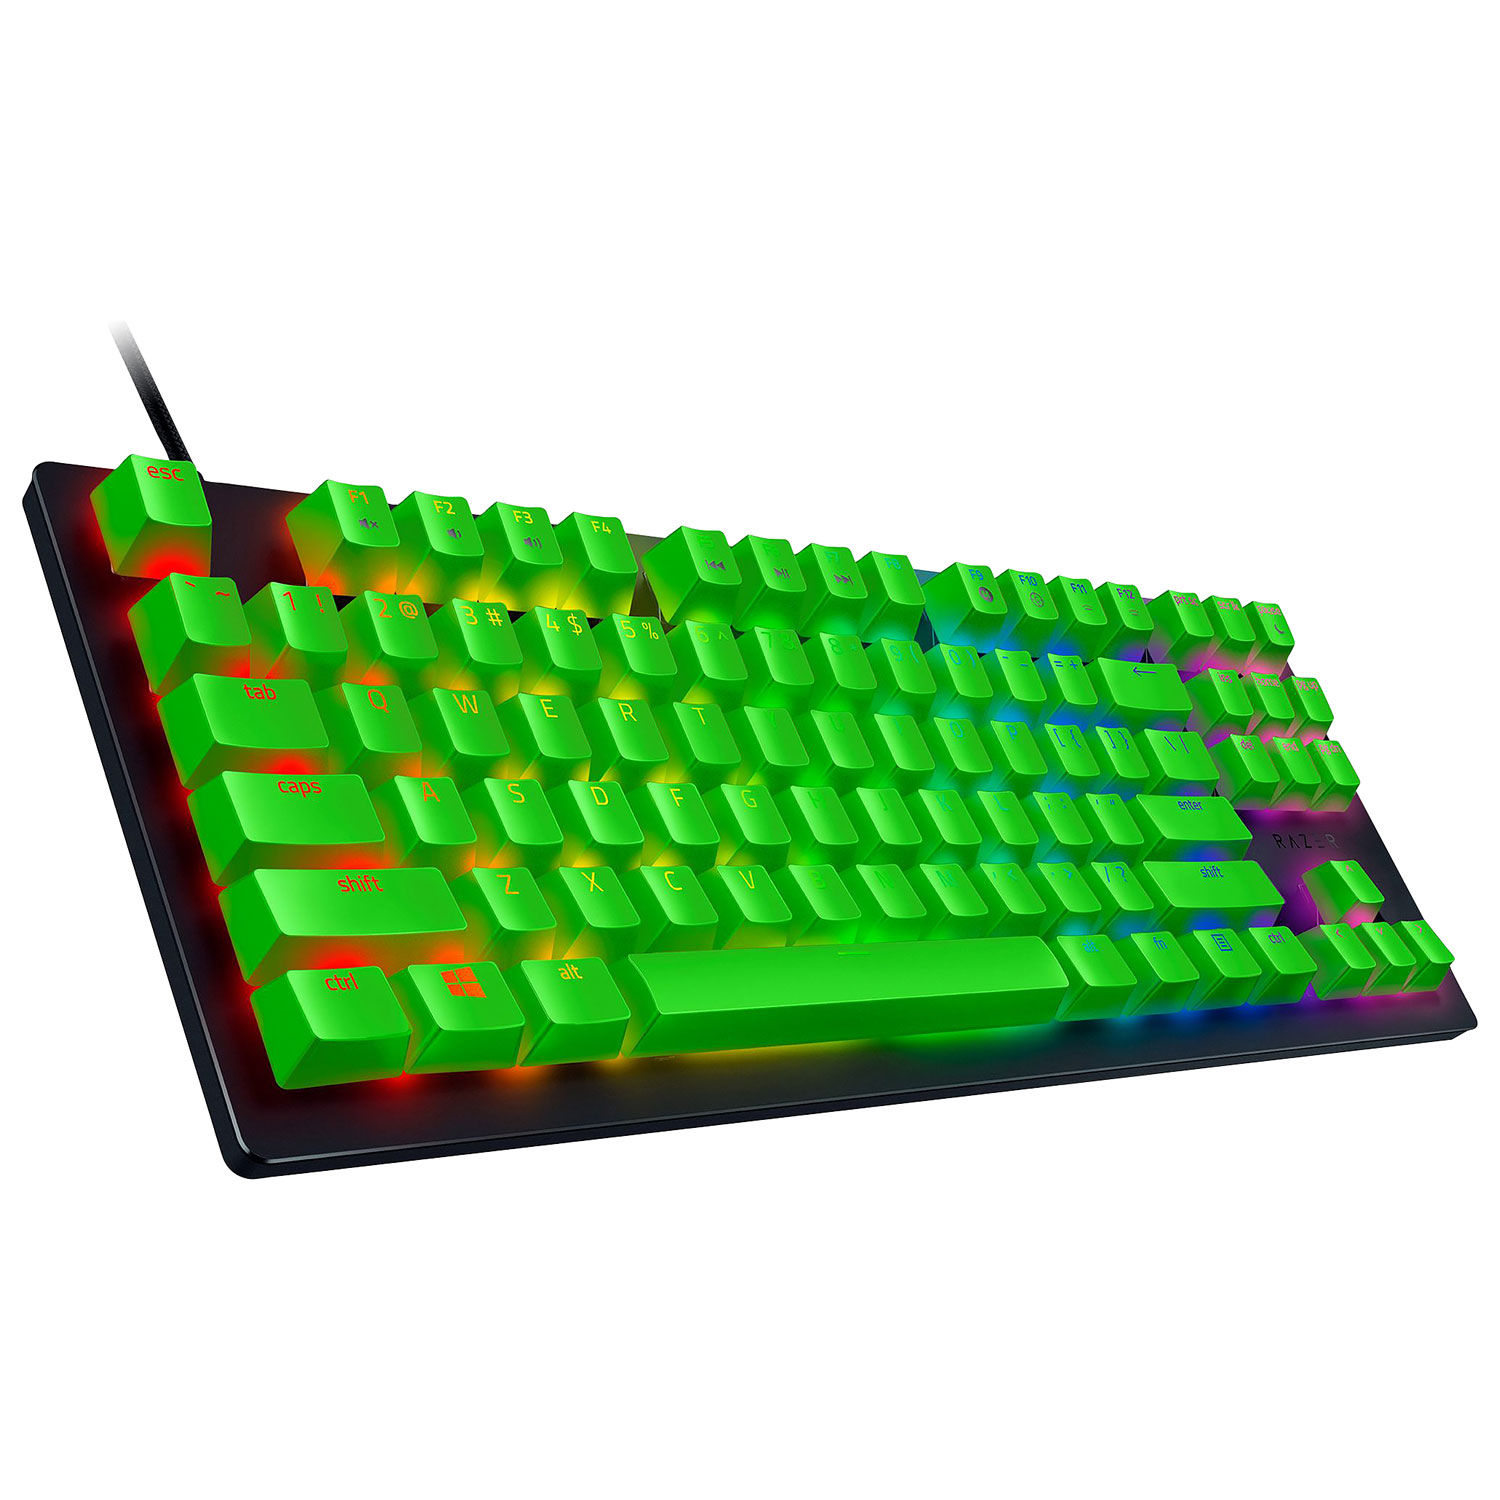 Razer Huntsman Tournament Edition Wired Backlit Gaming Keyboard 